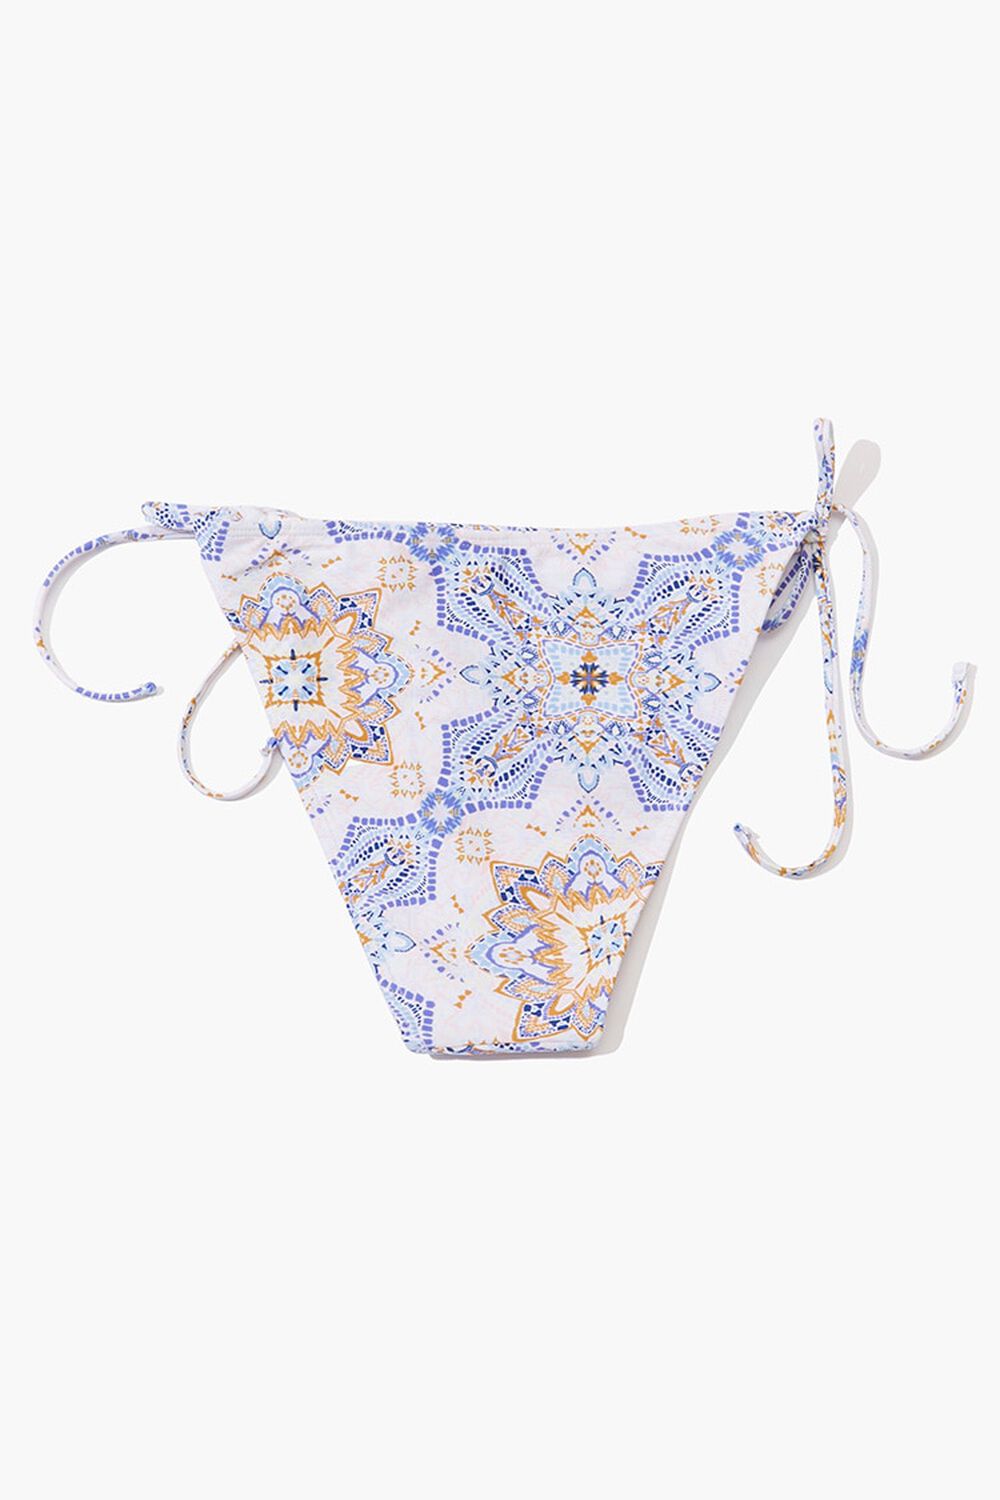 BLUE/MULTI Paisley String Bikini Bottoms, image 2